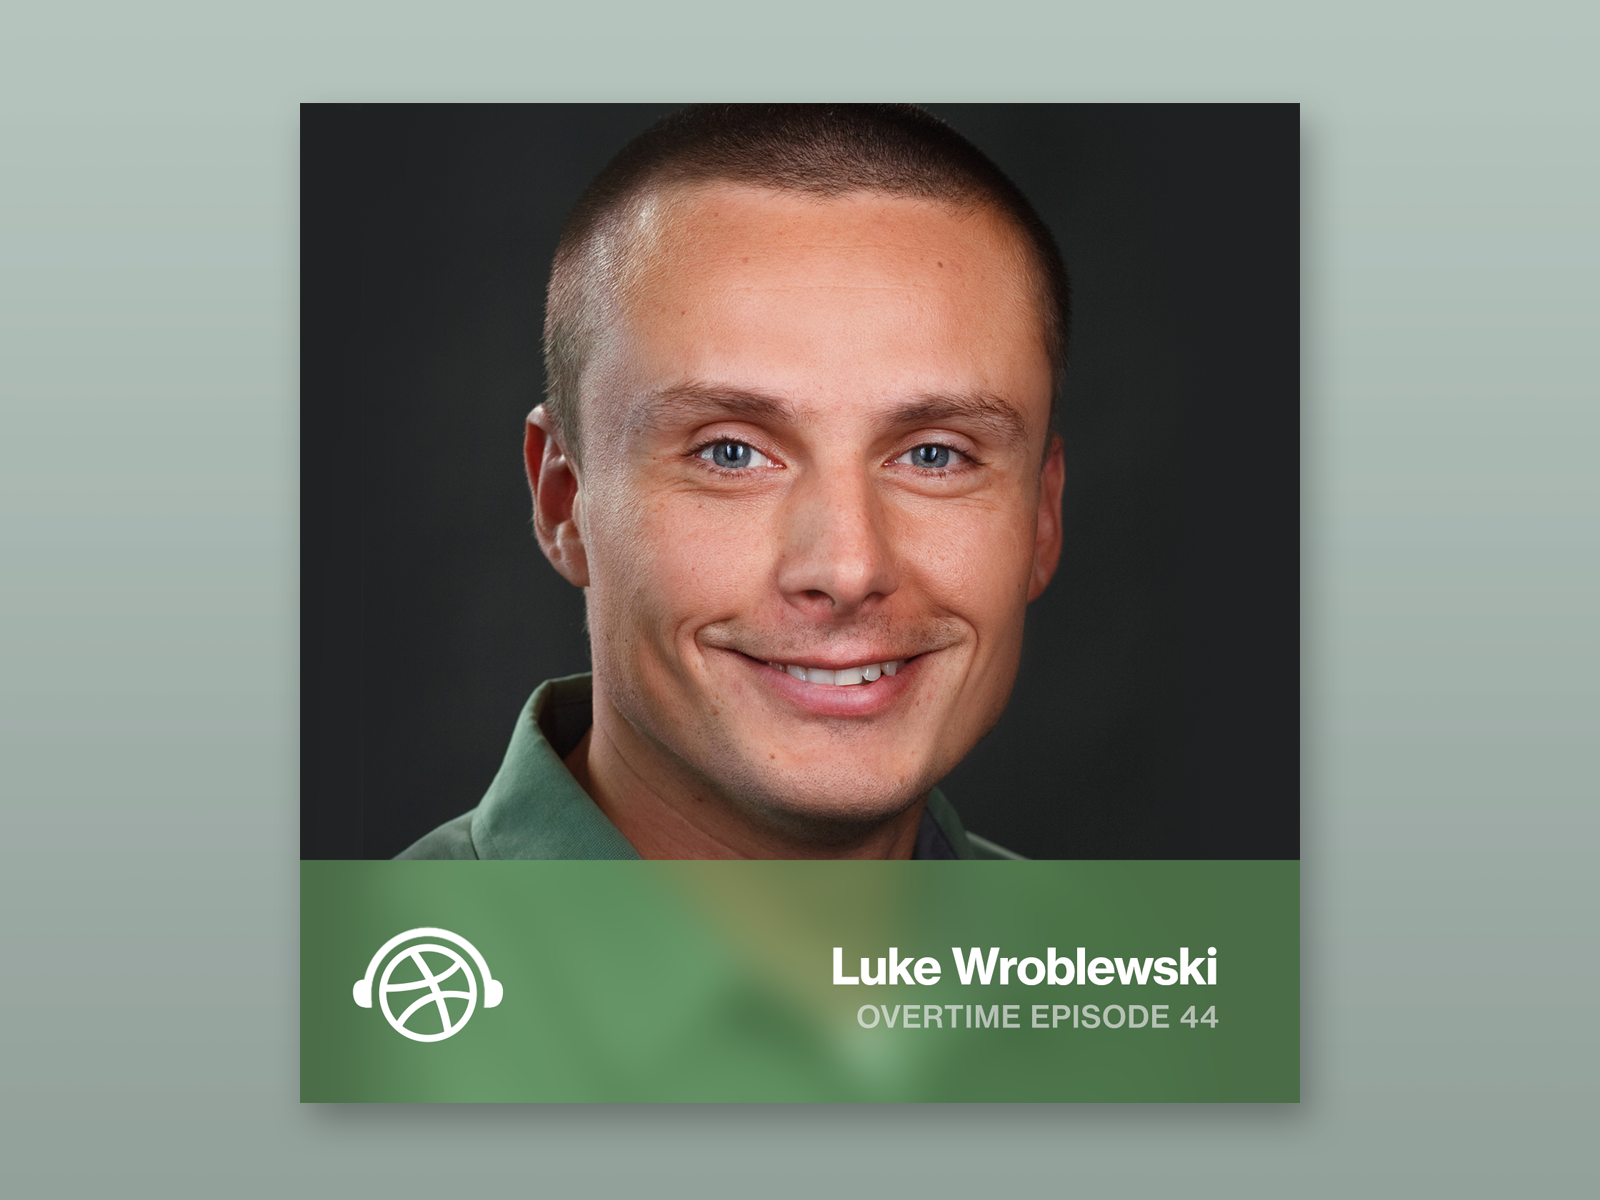 Luke wrobkewski